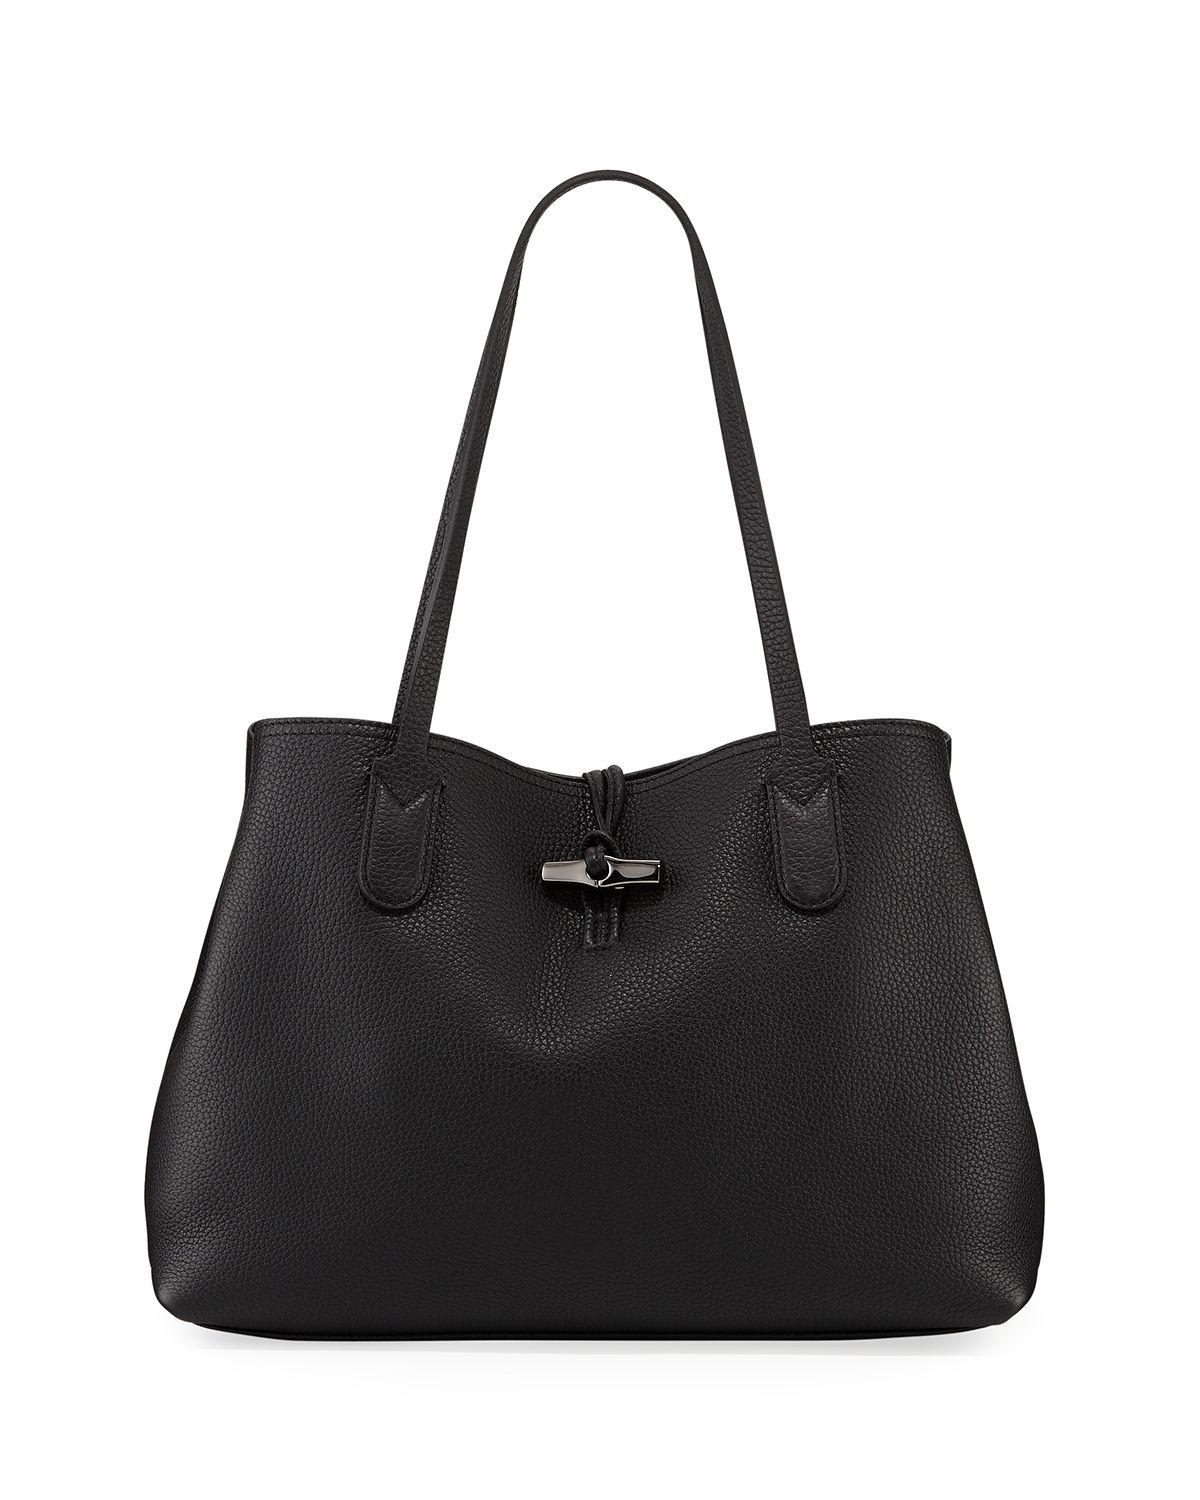 Lyst - Longchamp Roseau Essential Medium Leather Shoulder Tote Bag in Black